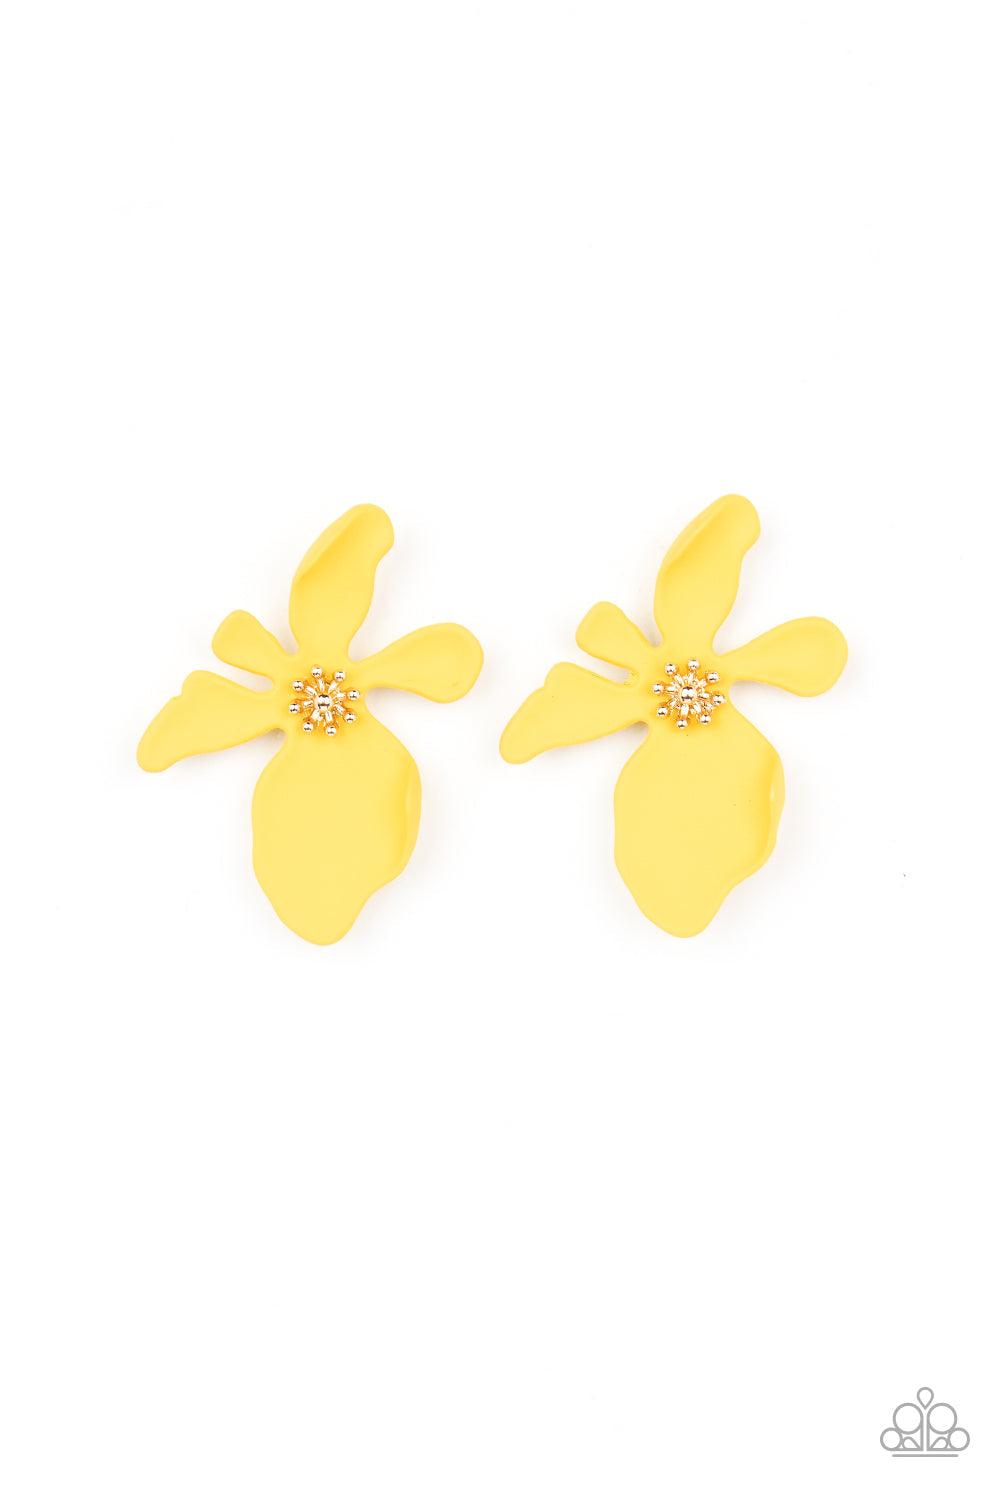 Hawaiian Heiress Yellow Flower Earrings - Paparazzi Accessories- lightbox - CarasShop.com - $5 Jewelry by Cara Jewels